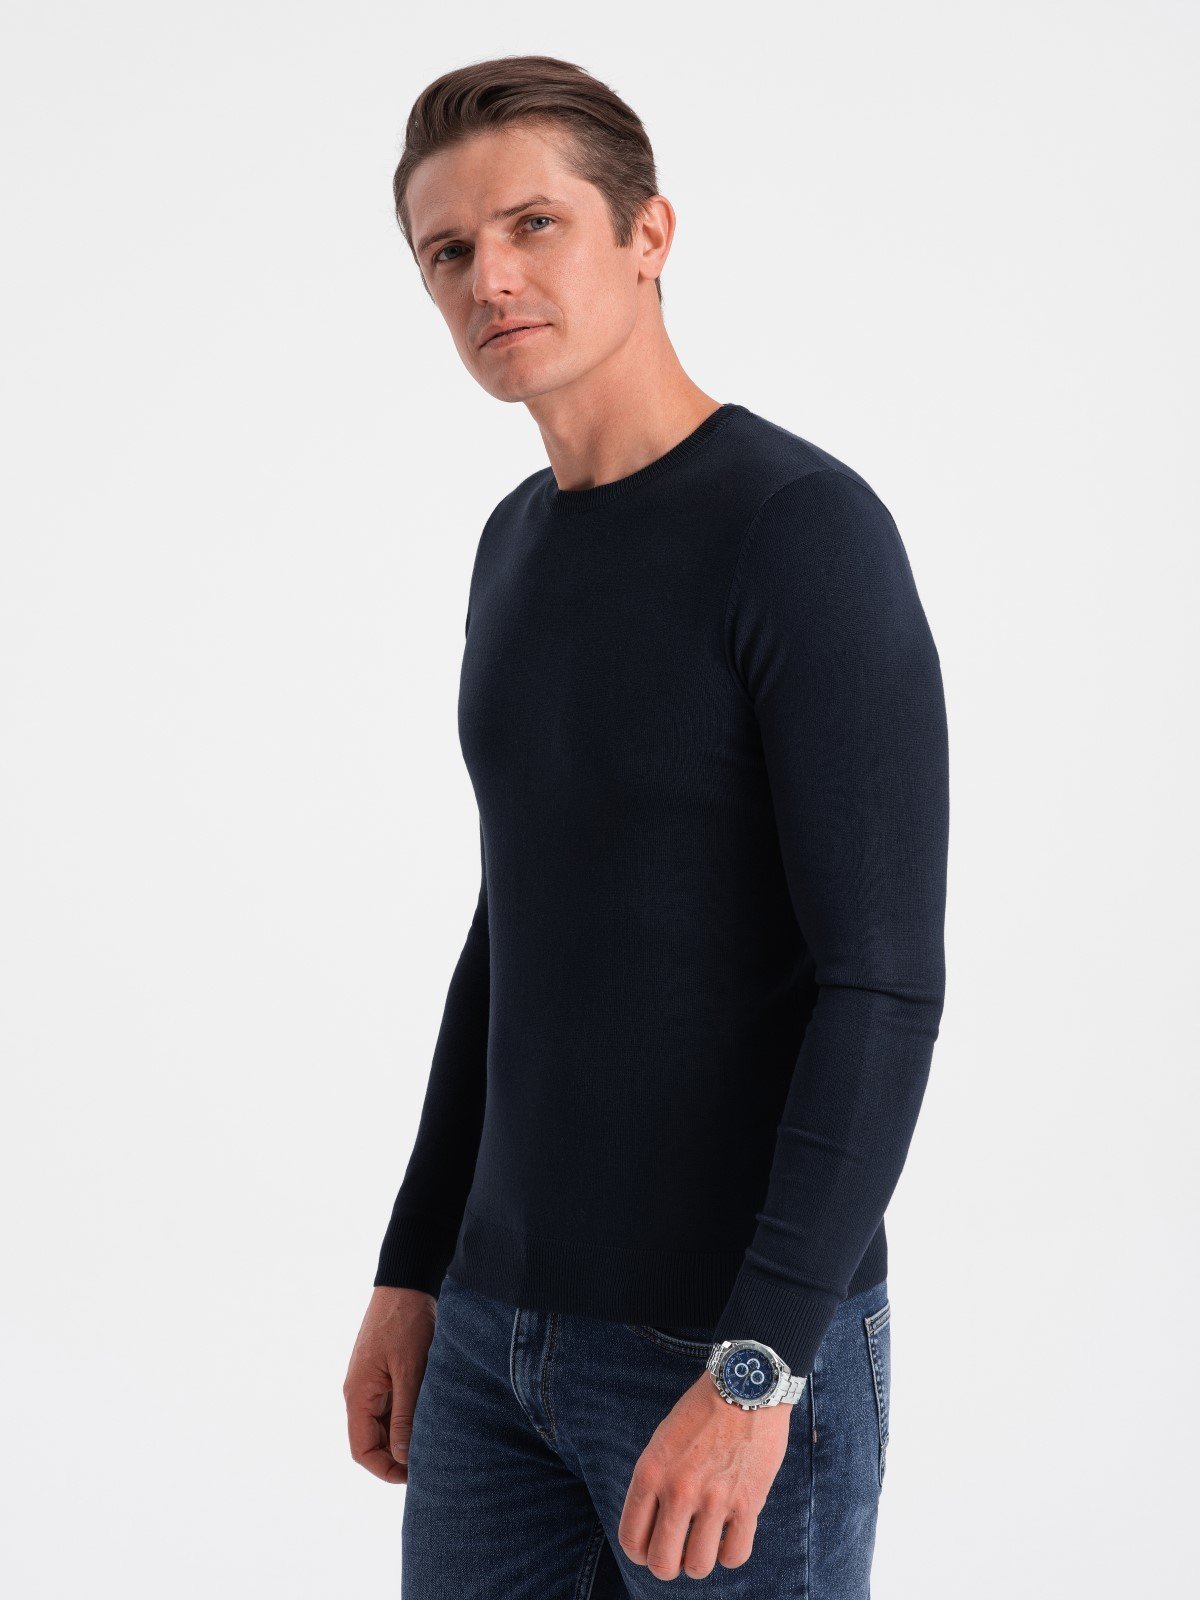 Classic men's sweater with round neckline - navy blue V9 OM-SWBS V9 OM-SWBS - 0106